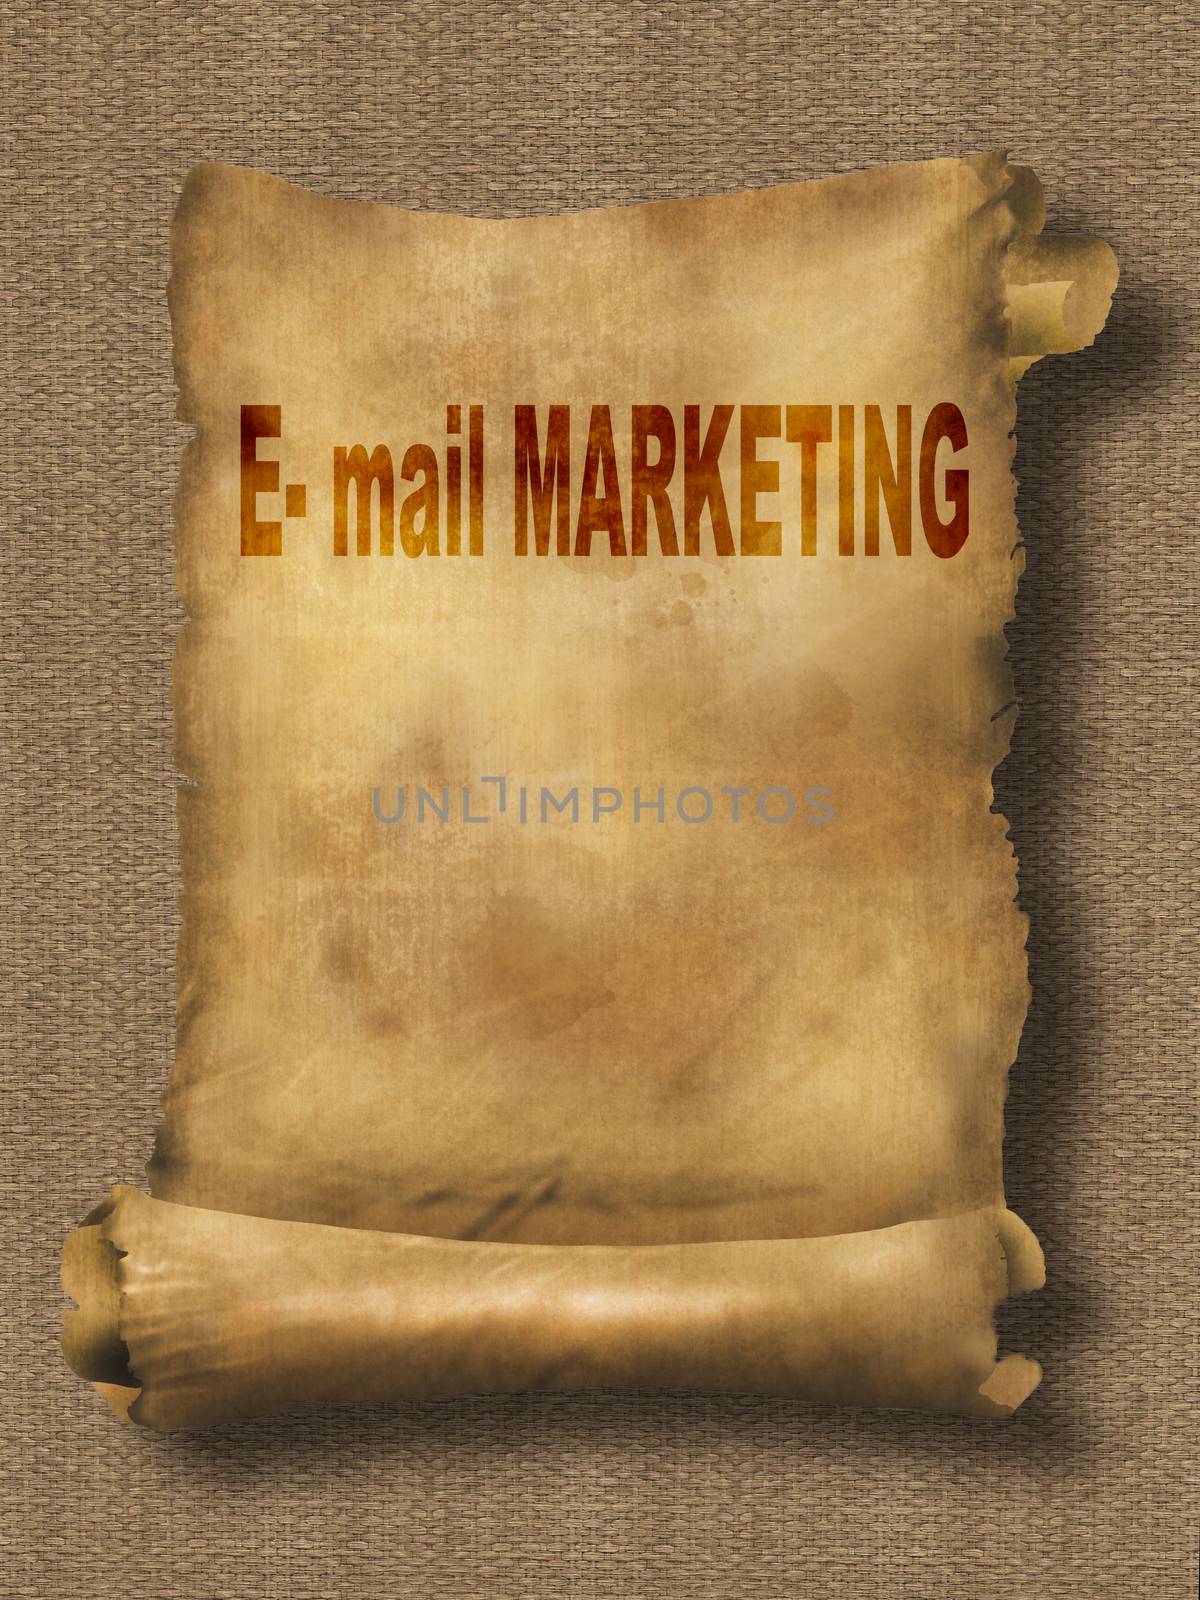 e-mail marketing by vitanovski